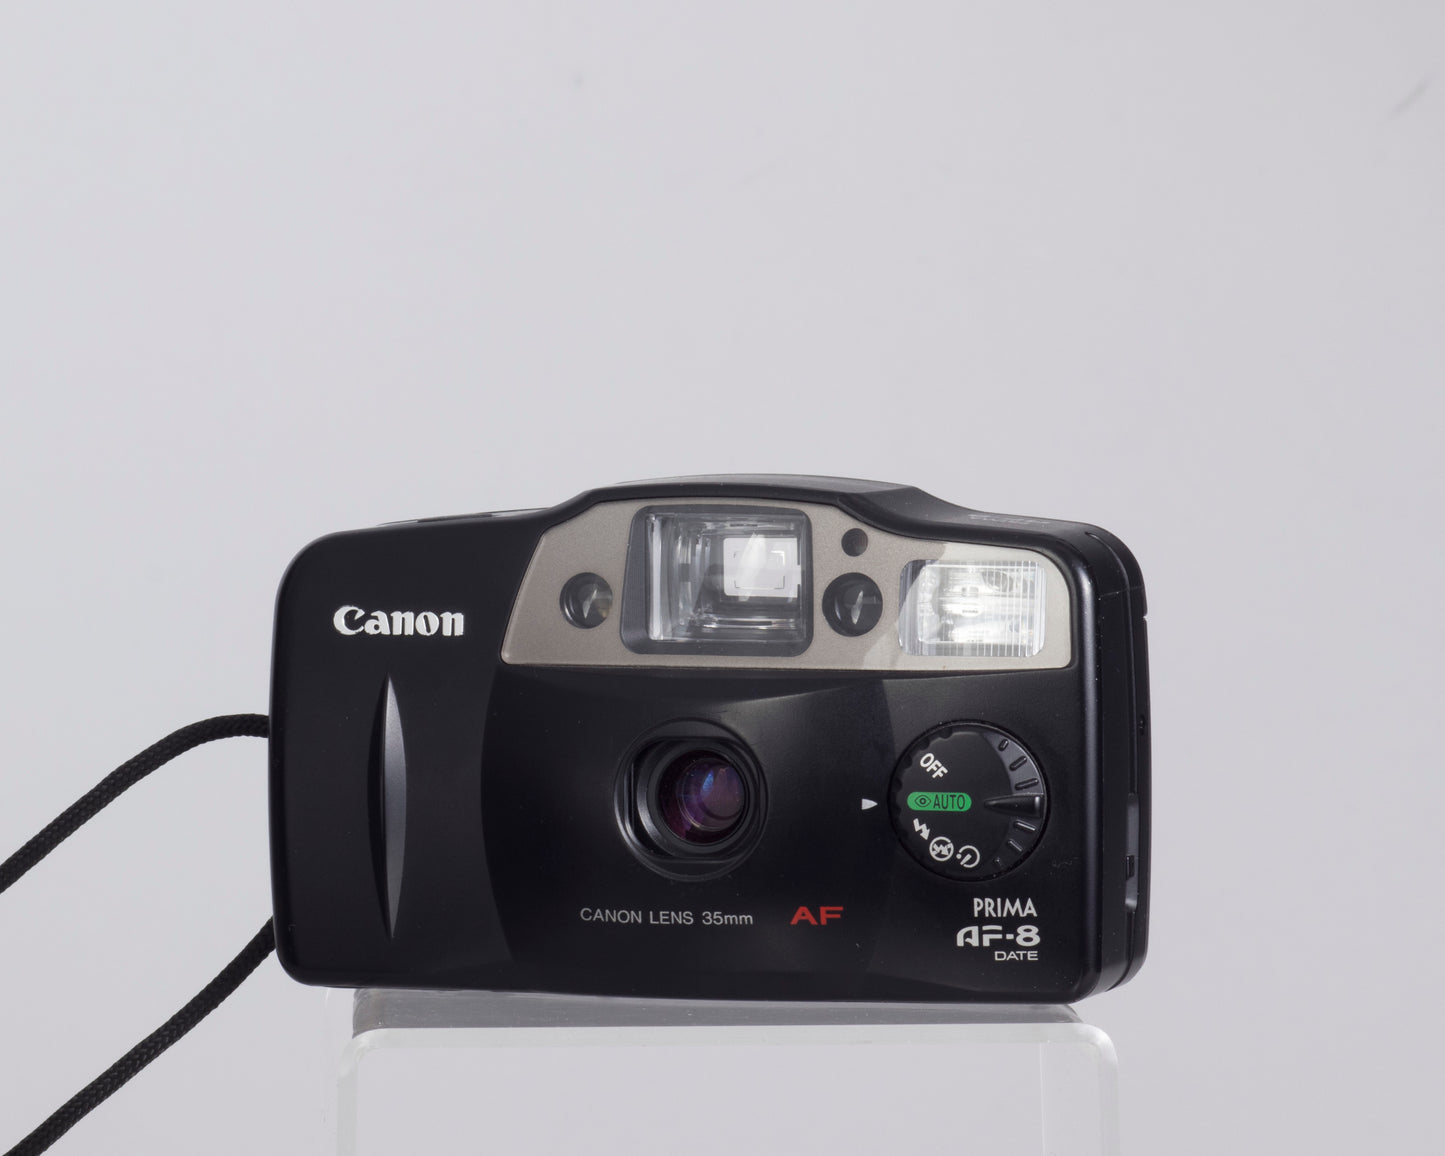 Canon Prima AF-8 Date (serial 4232286)